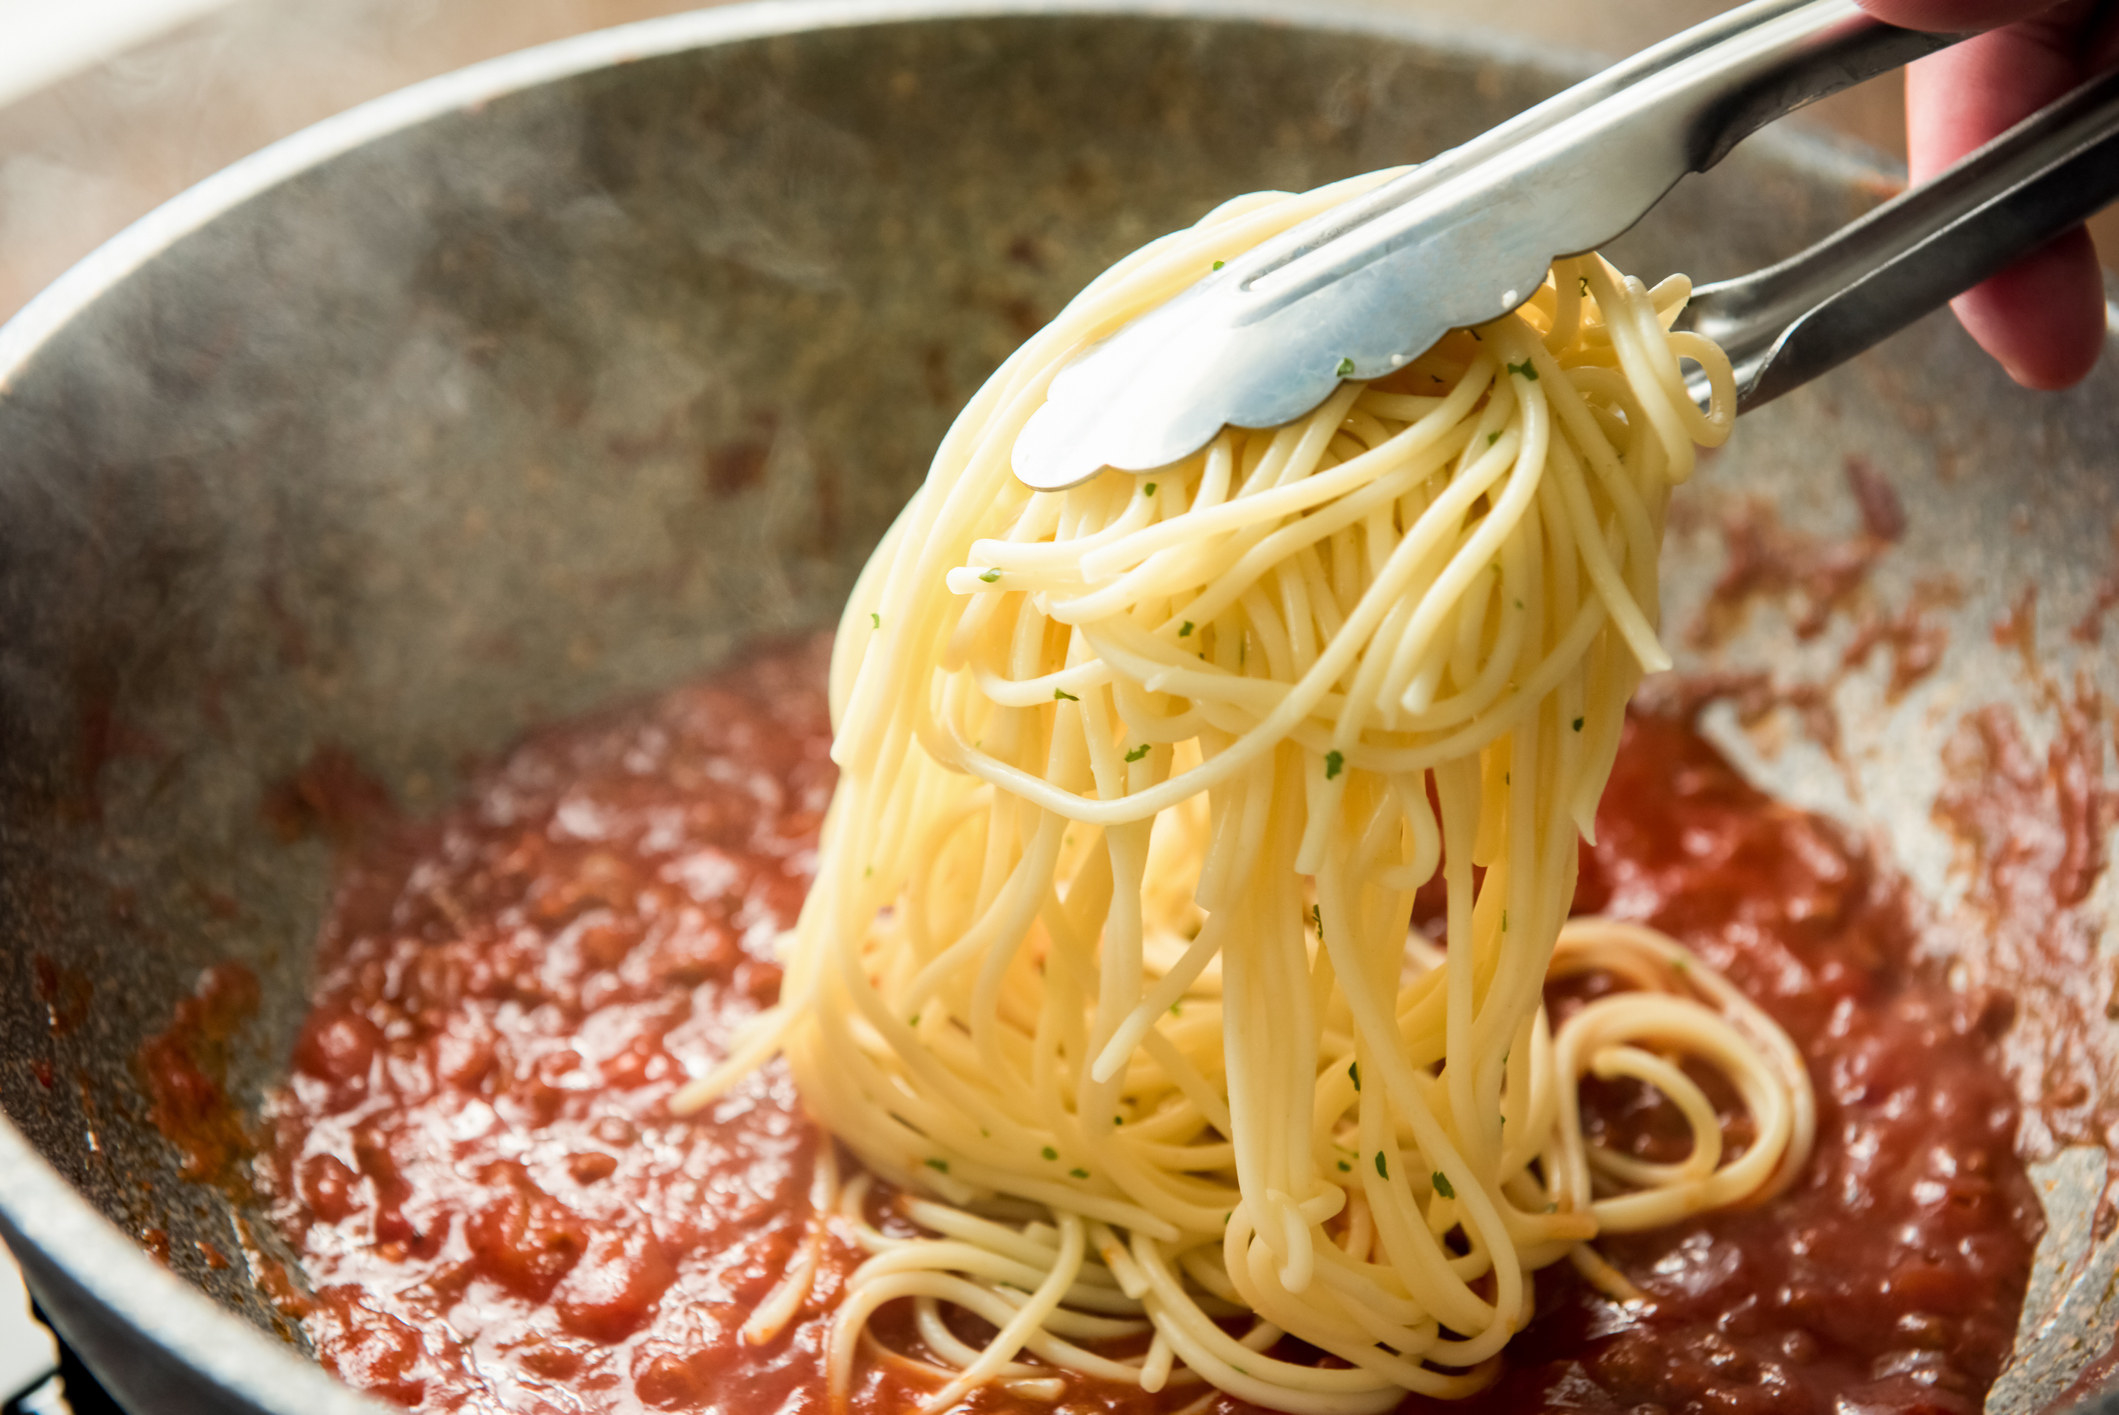 Putting spaghetti into Bolgonese sauce